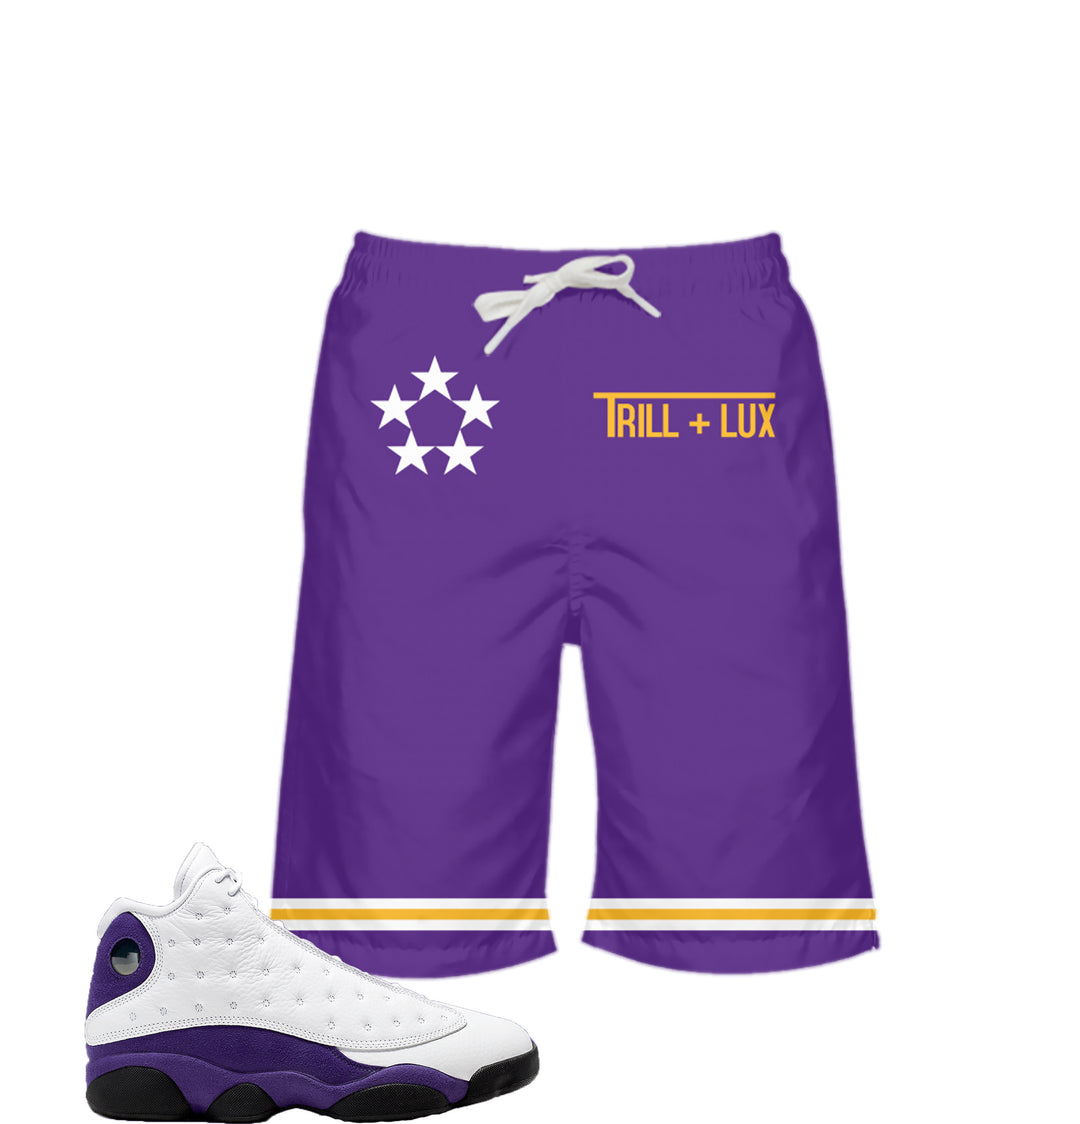 KIDS Court Purple | Retro Jordan 13 Colorblock Boys | Girls | Swim Trunks | Swim fashion | Designed to Match Air Jordan XIII